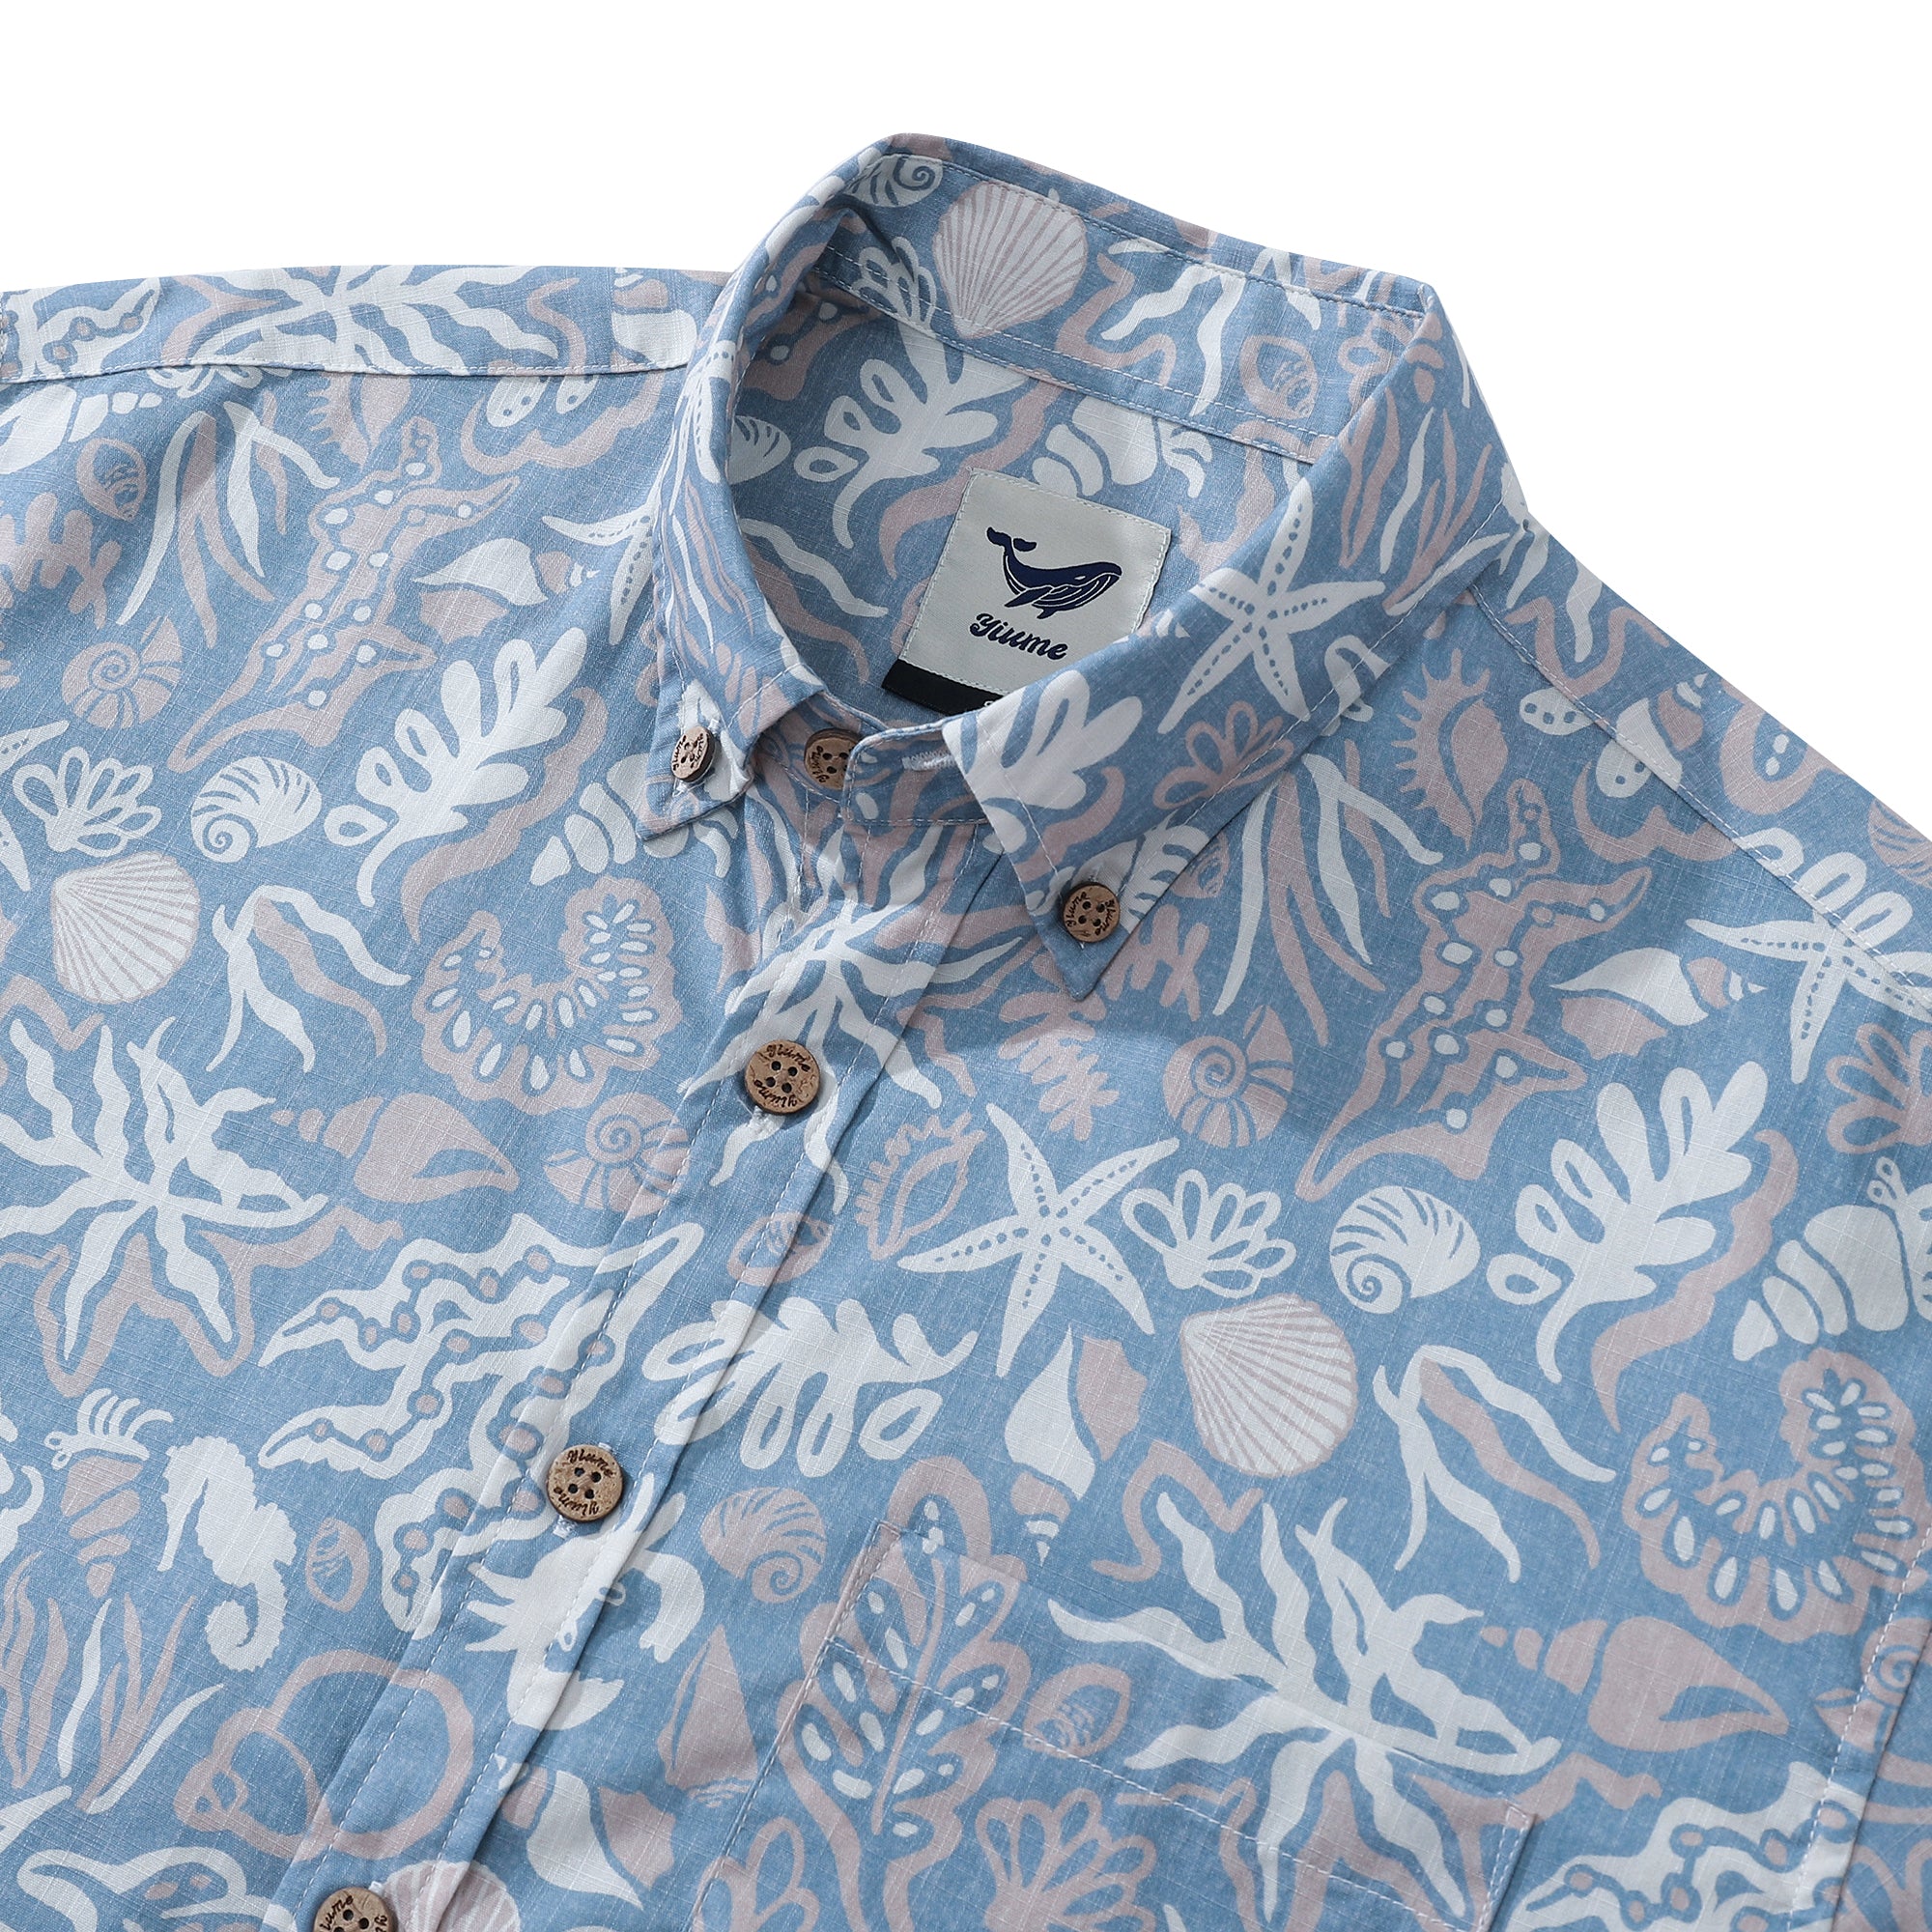 Mens Big and Tall Shirts 100% Cotton Hawaiian Shirts for Men Oceanic Print Short-Sleeved